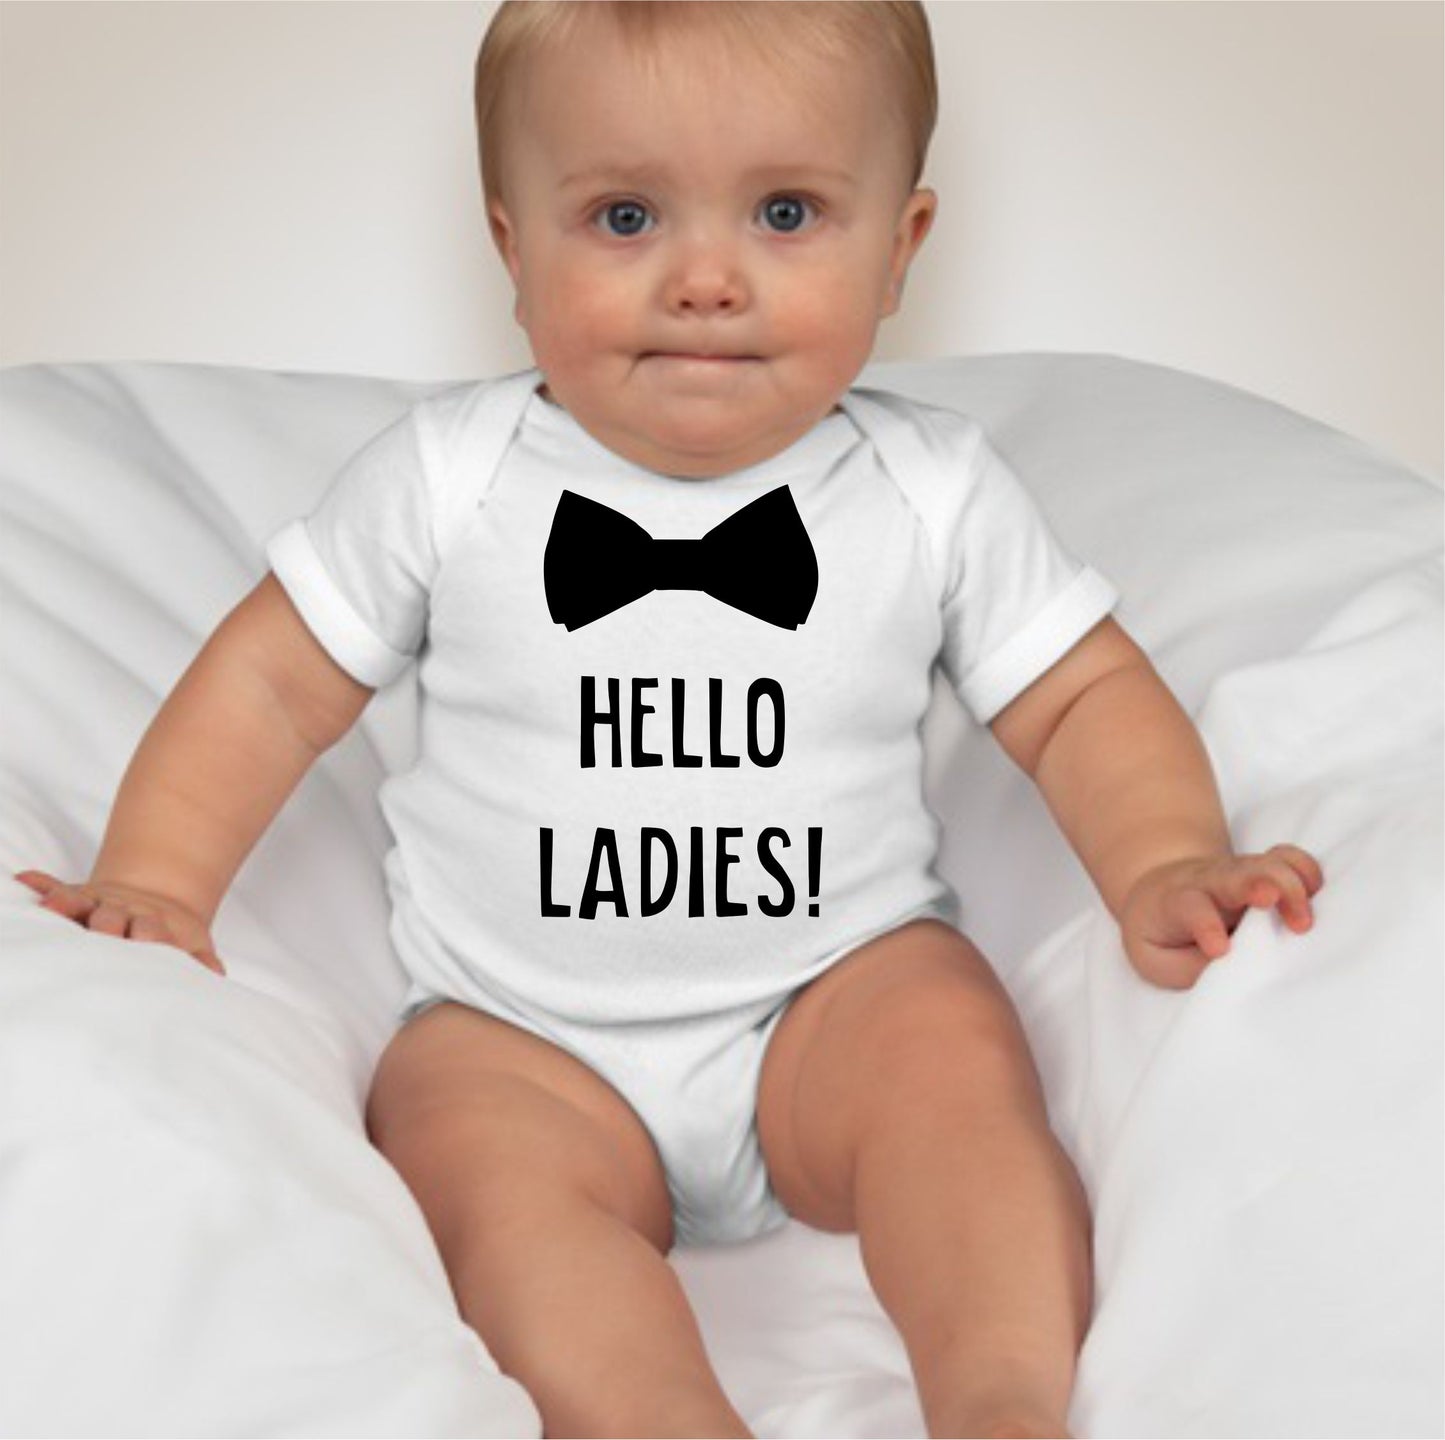 Baby Statement Onesies - Bowtie Hello Ladies